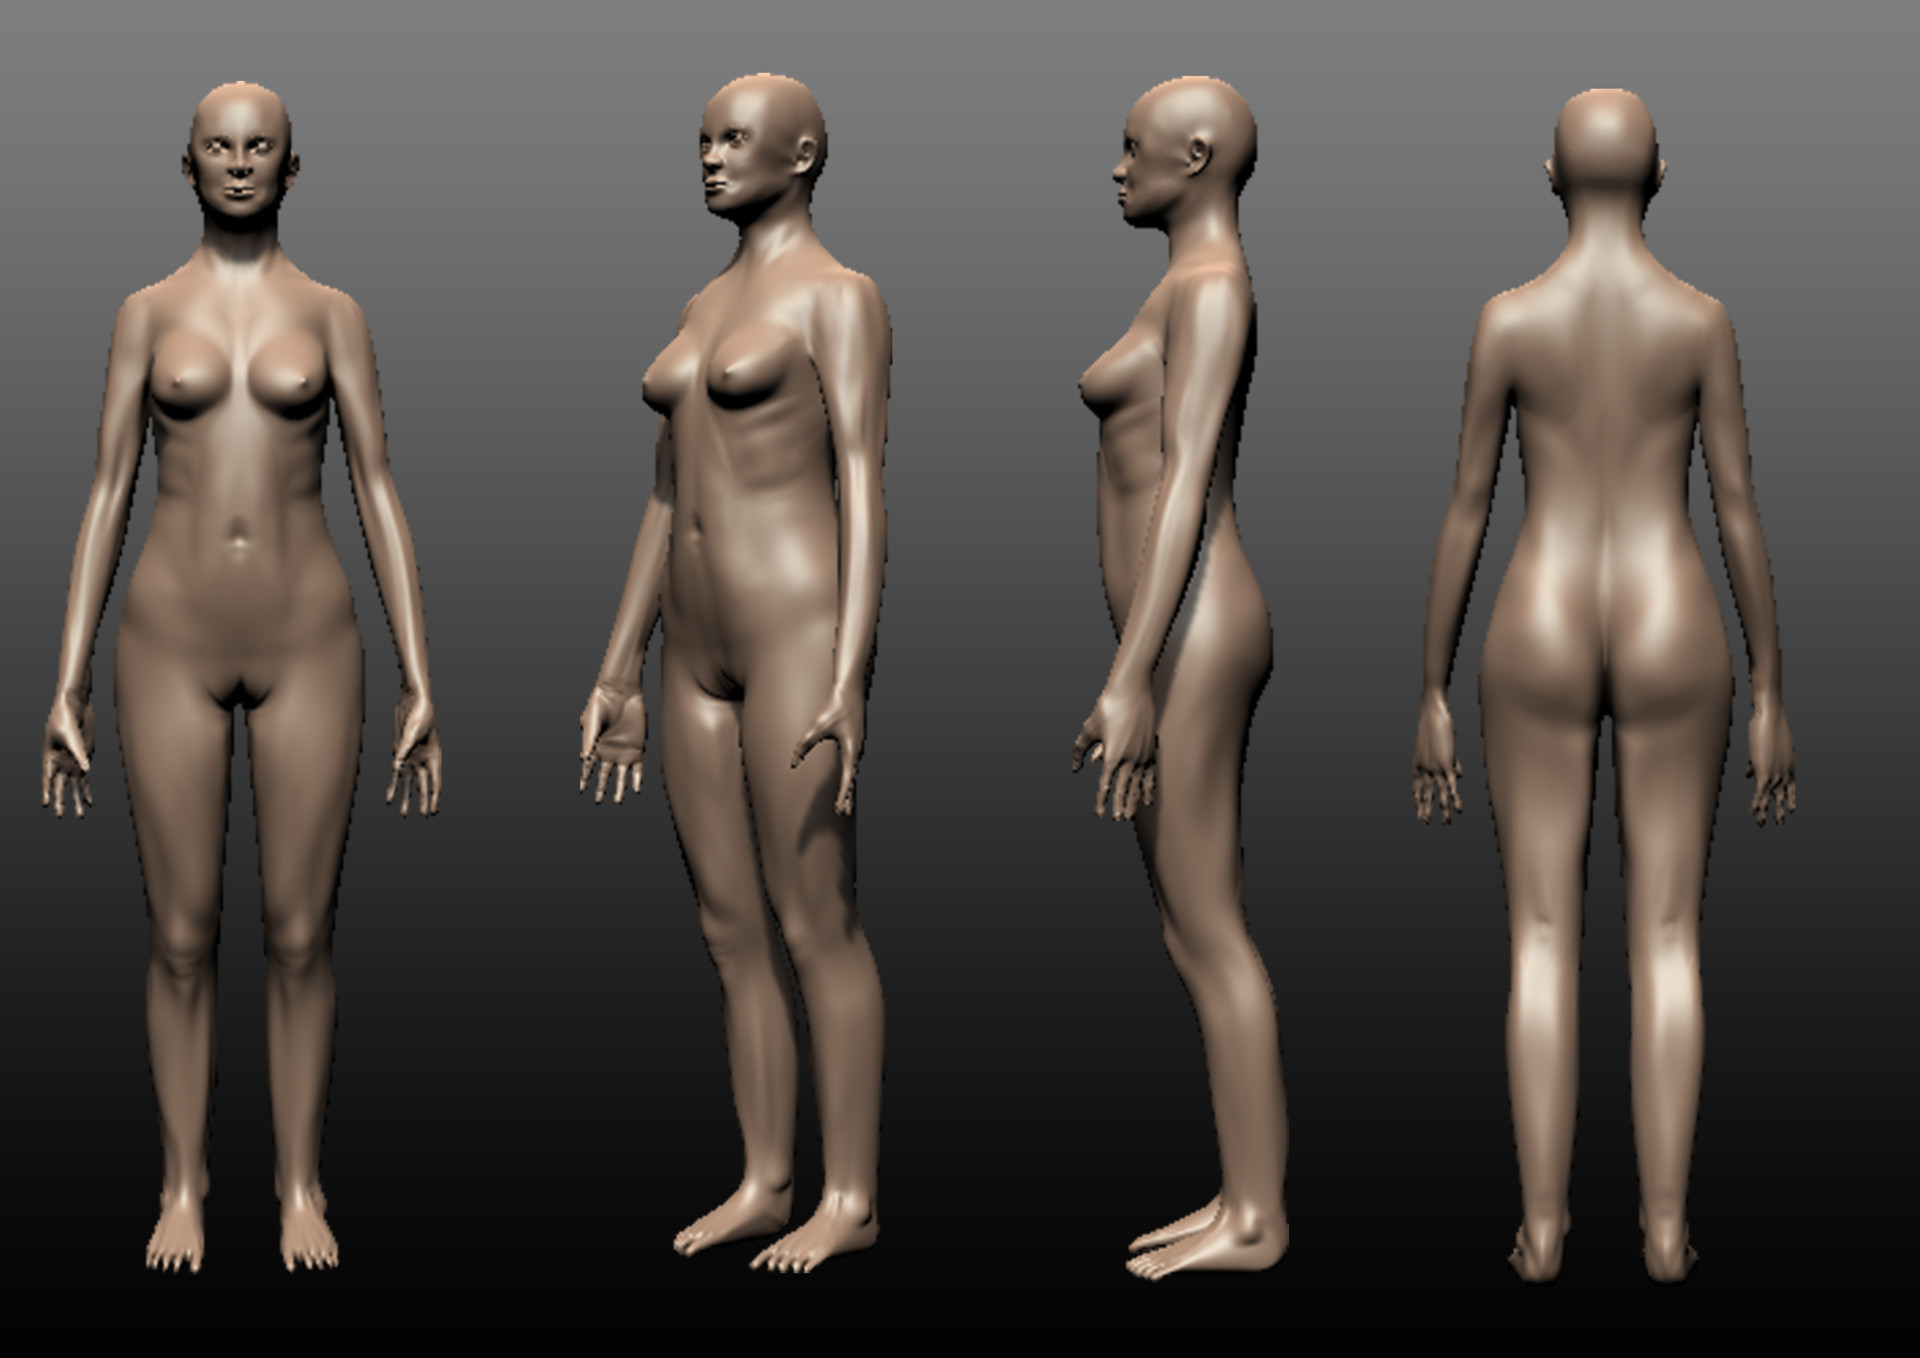 Free nude blender models - 🧡 Ysalex Anatomy Practice Thread (nsfw) - Page ...